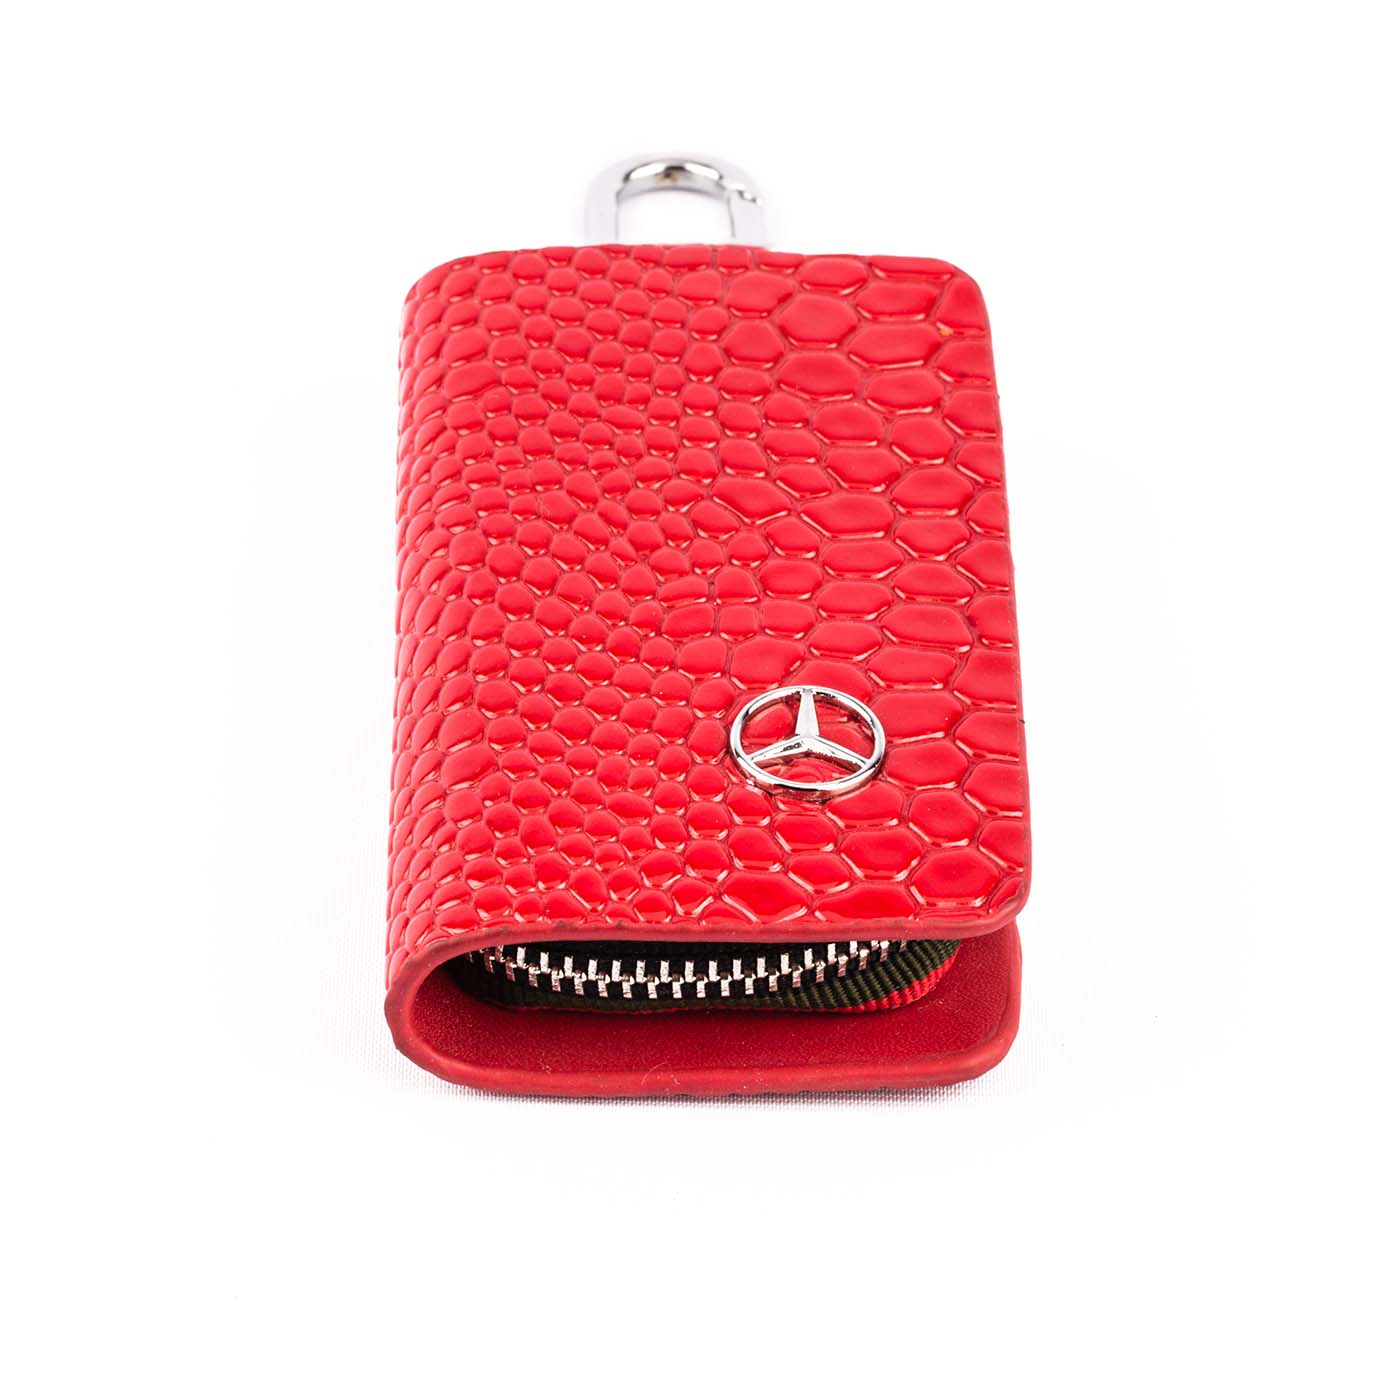 Mercedes Benz Red Key Chain